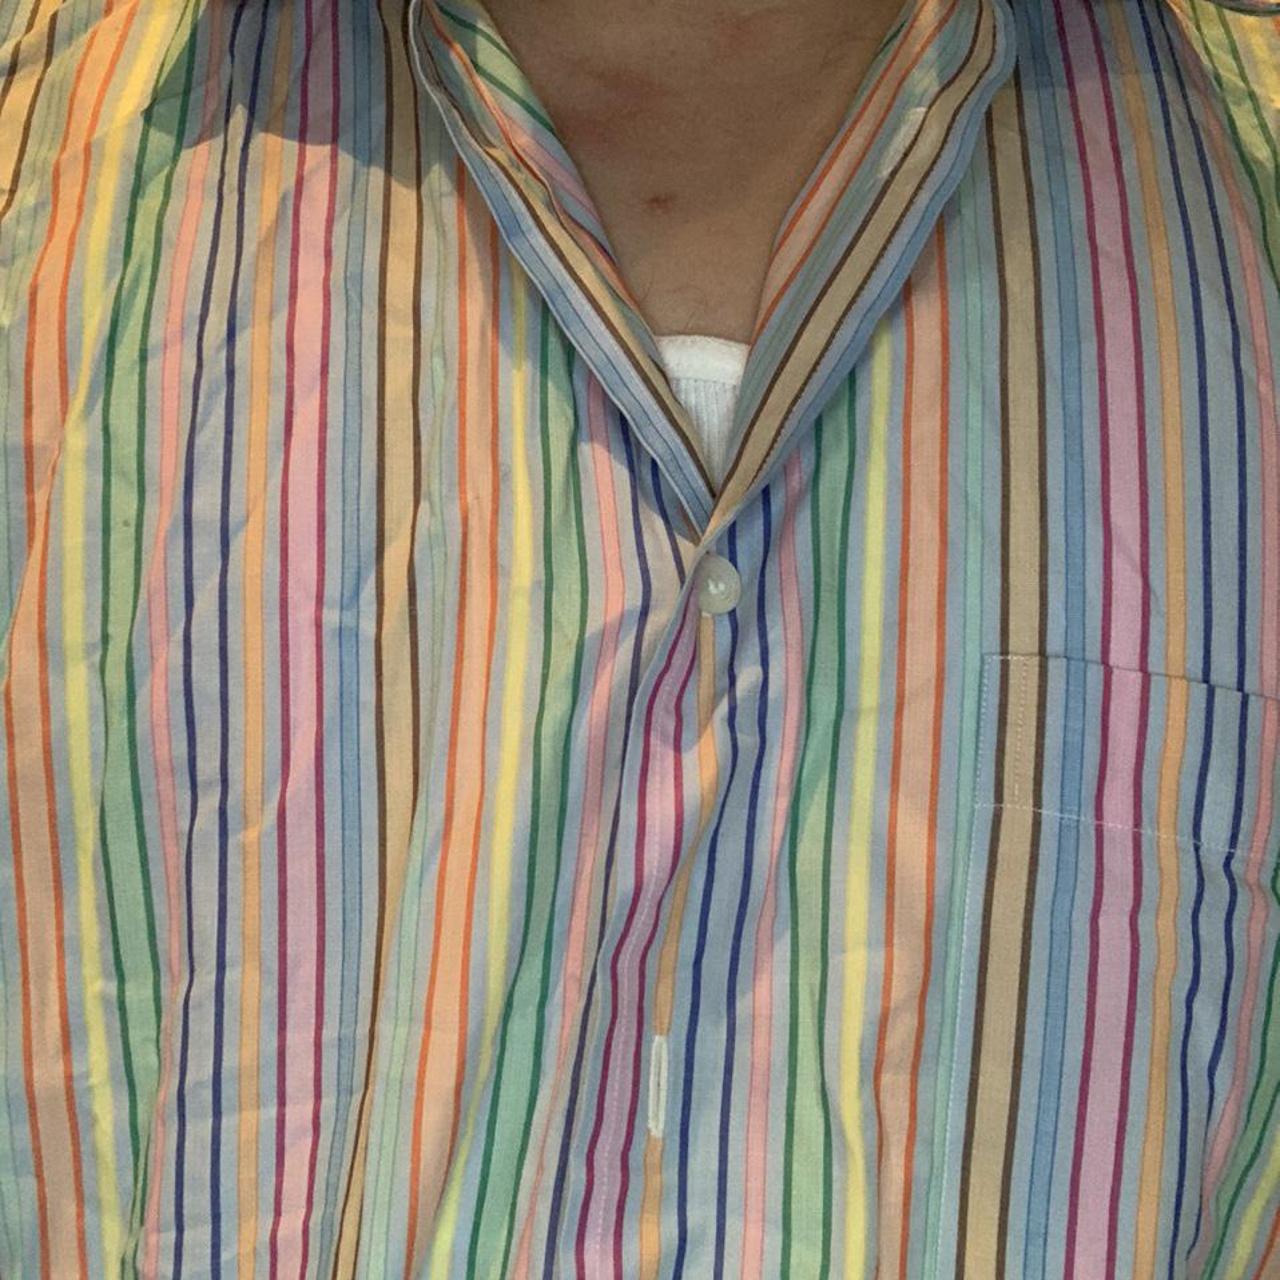 Product Image 1 - Vintage Brioni shirt. Still has